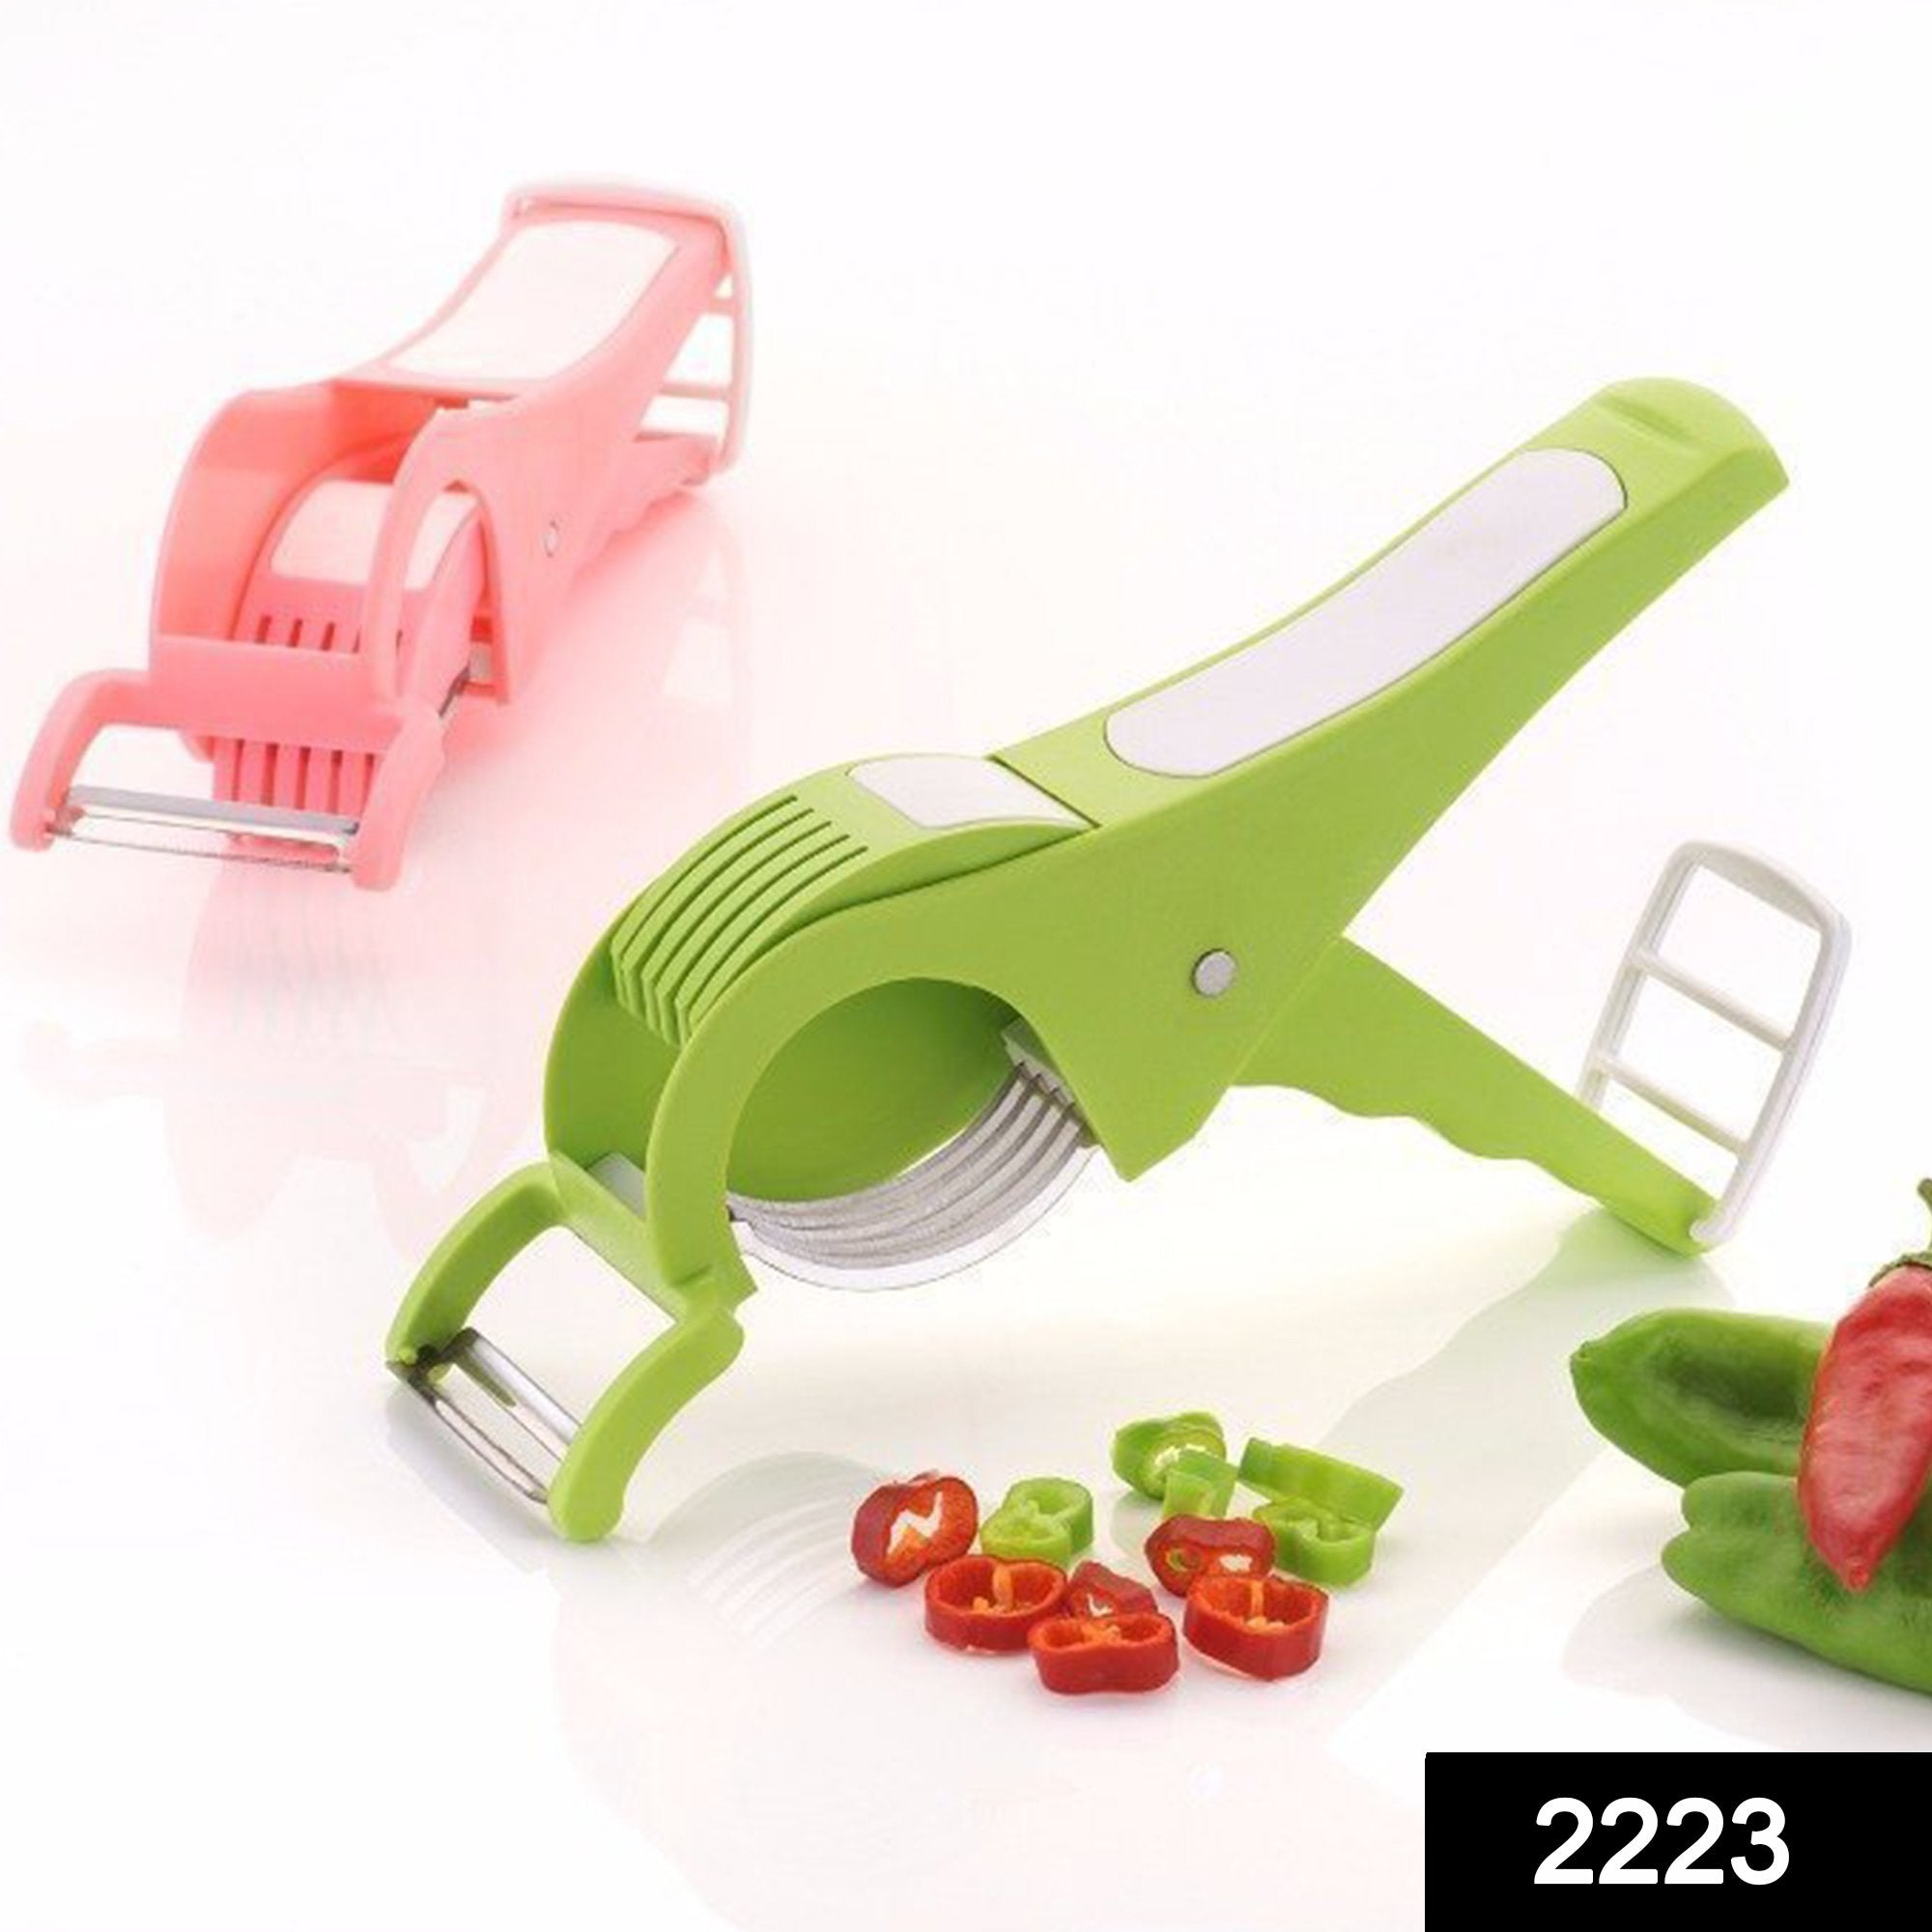 2223 Multipurpose 2 in 1 Stainless Steel Vegetable Cutter/Peeler - SkyShopy